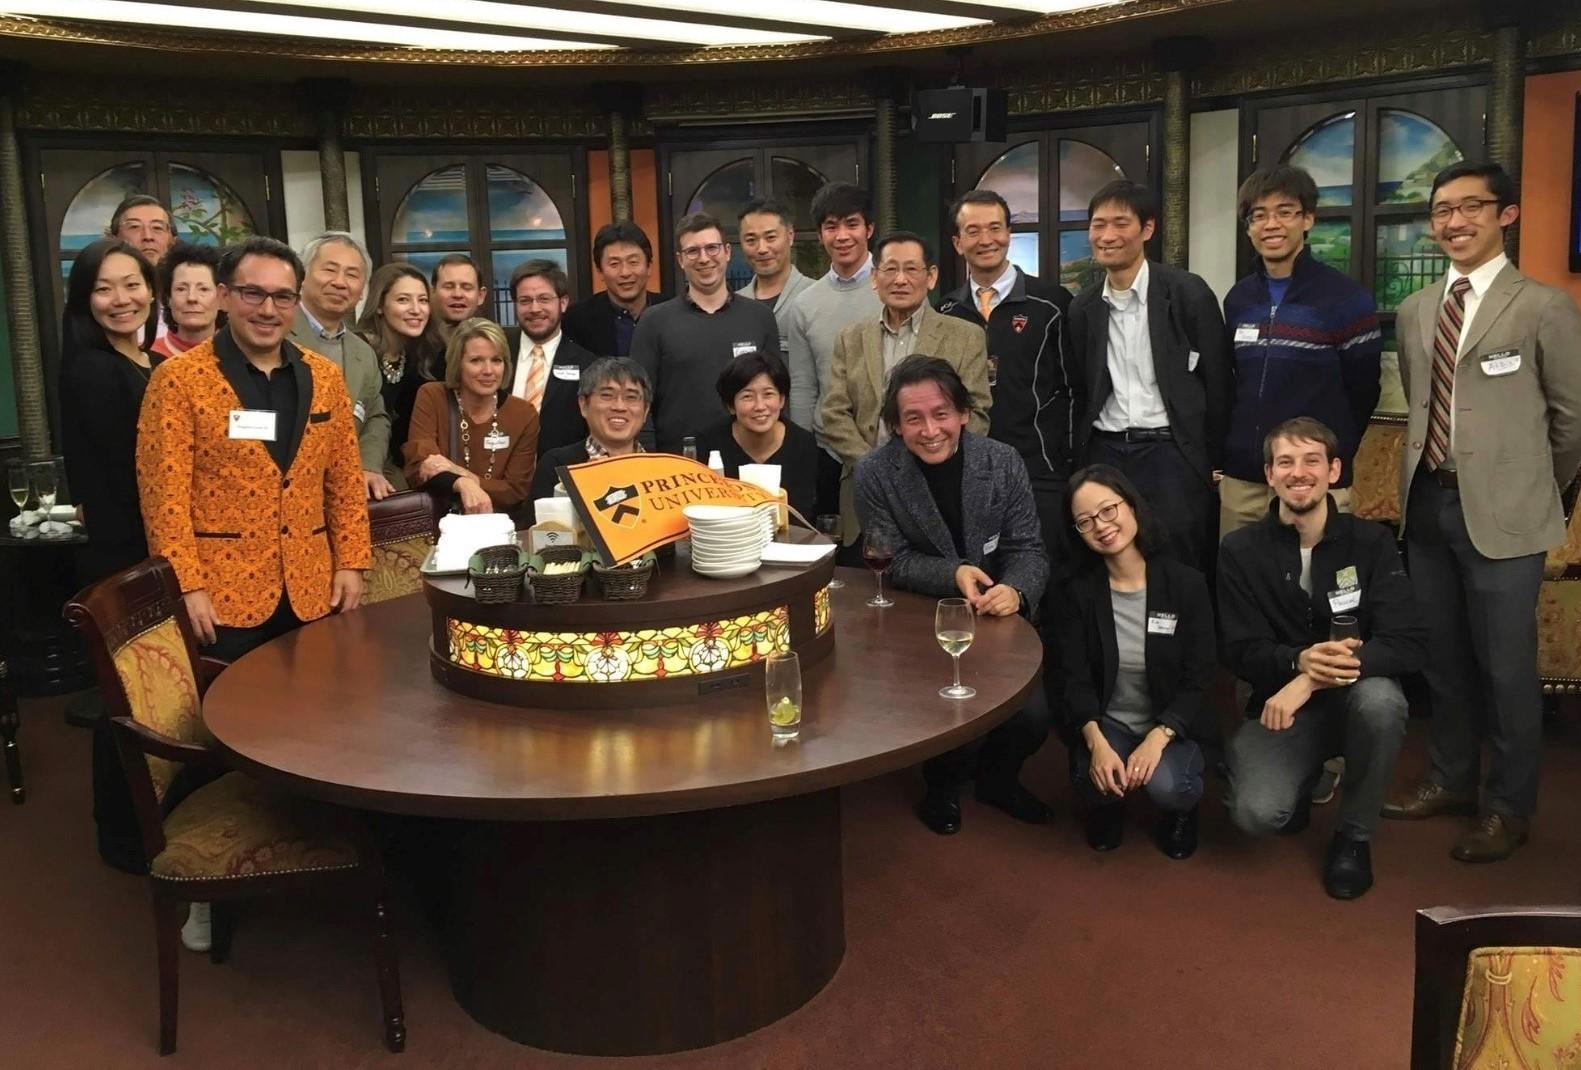 Alumni members of the Princeton Club of Japan.